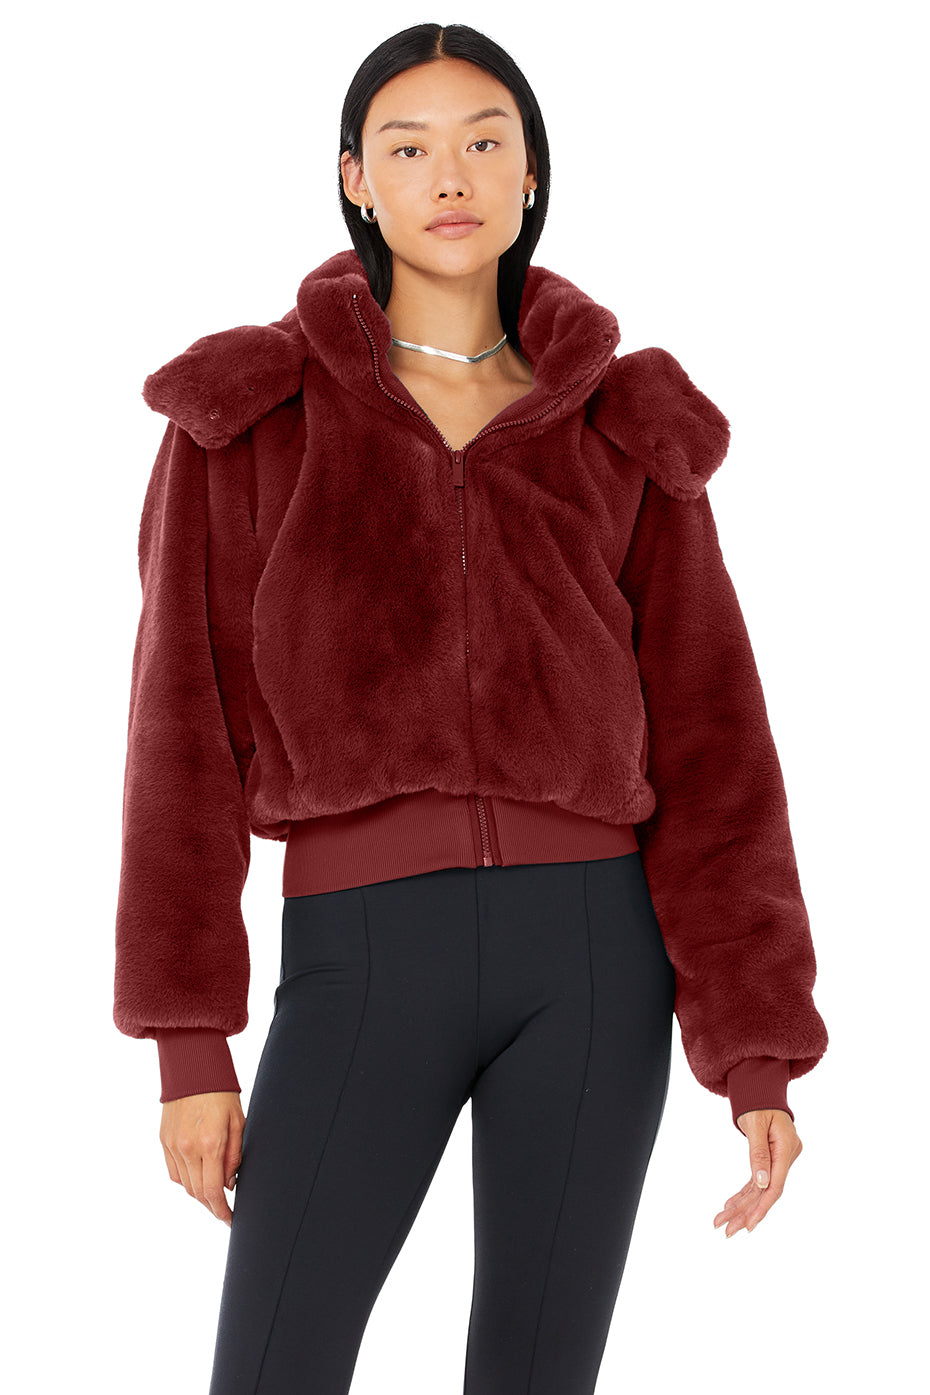 Faux Fur Foxy Jacket in Cranberry by Alo Yoga - International Design Forum